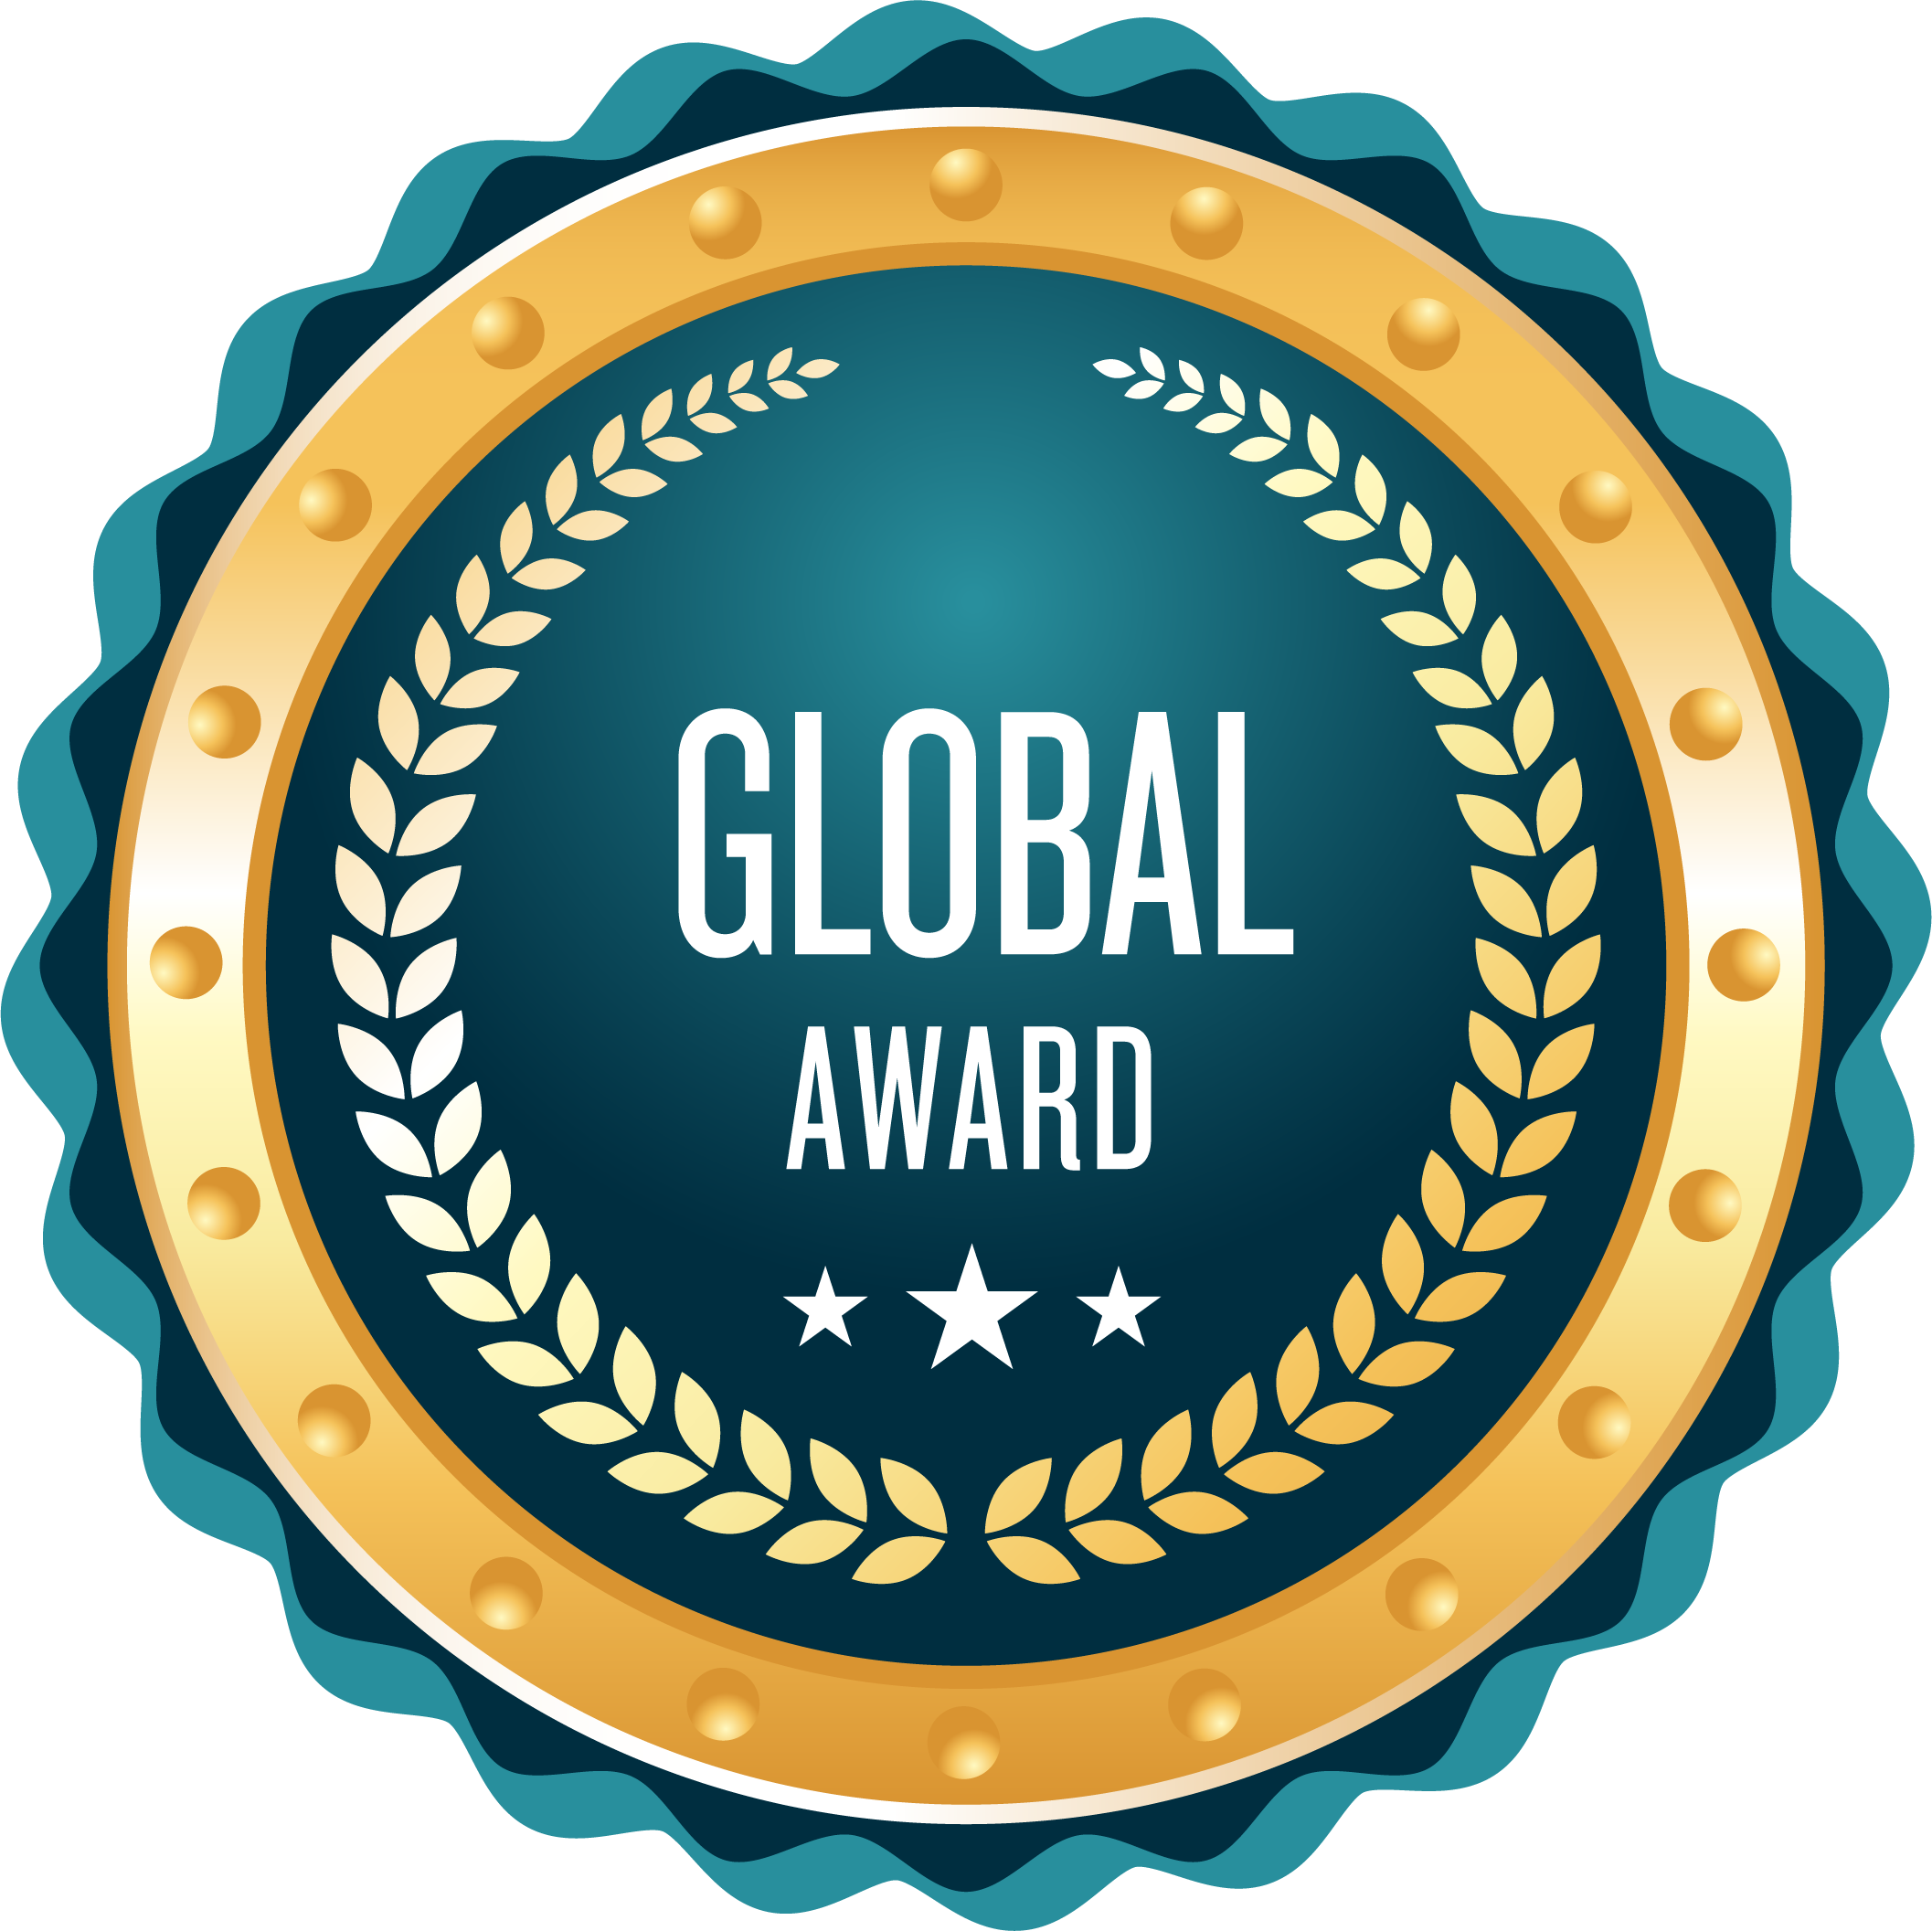 Global Award Winner Shield